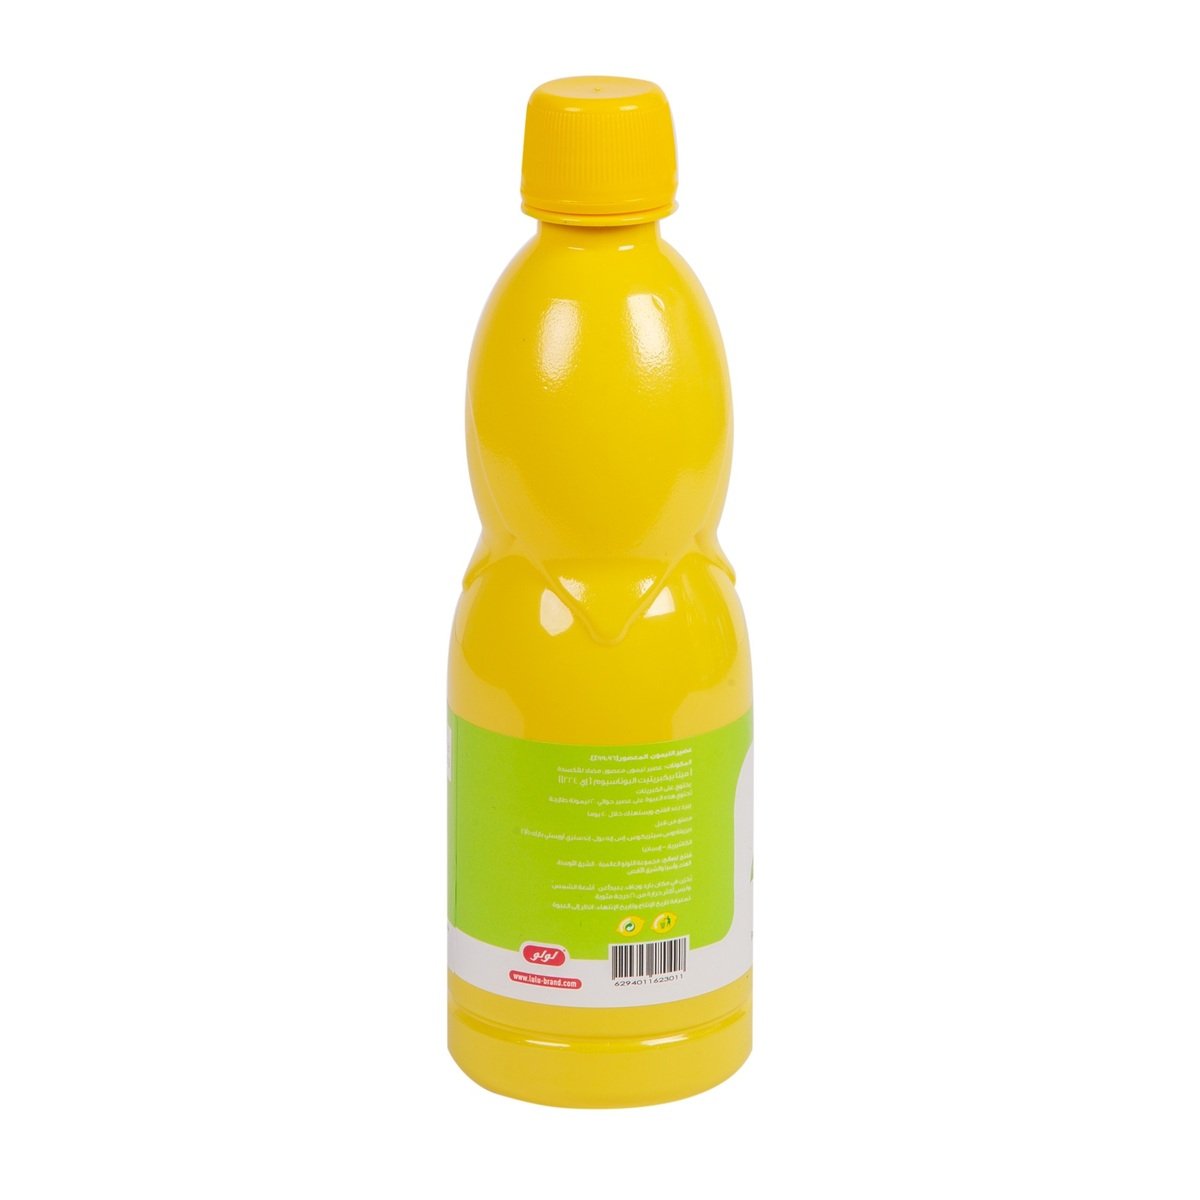 LuLu Freshly Squeezed Lemon juice 500 ml